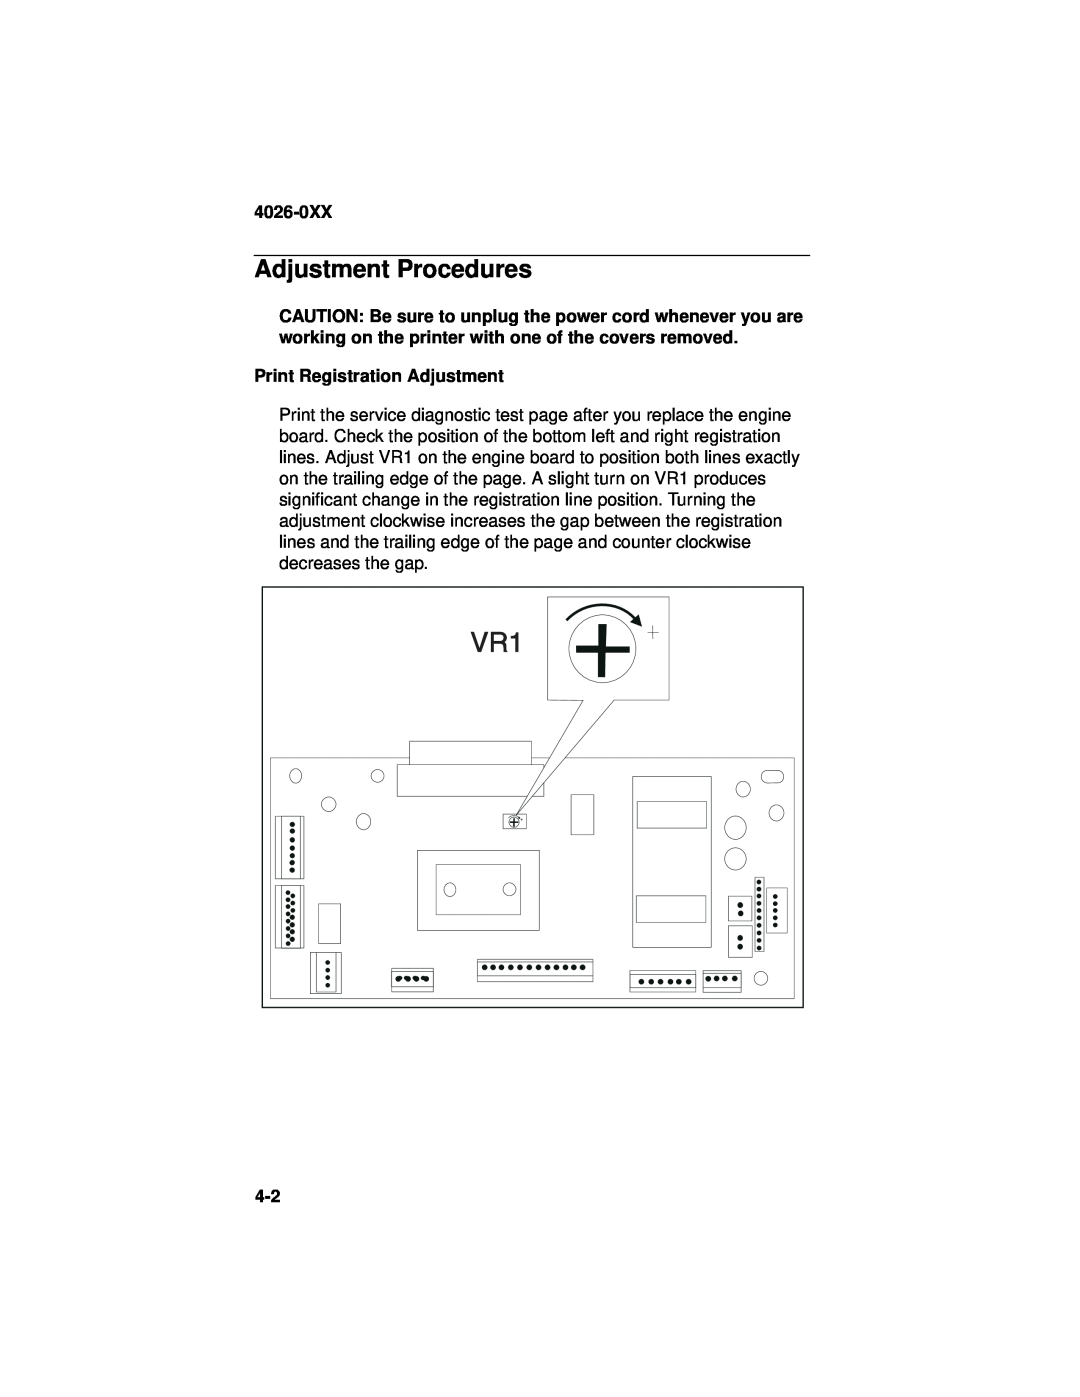 Lexmark 4026-0XX manual Adjustment Procedures, Print Registration Adjustment 